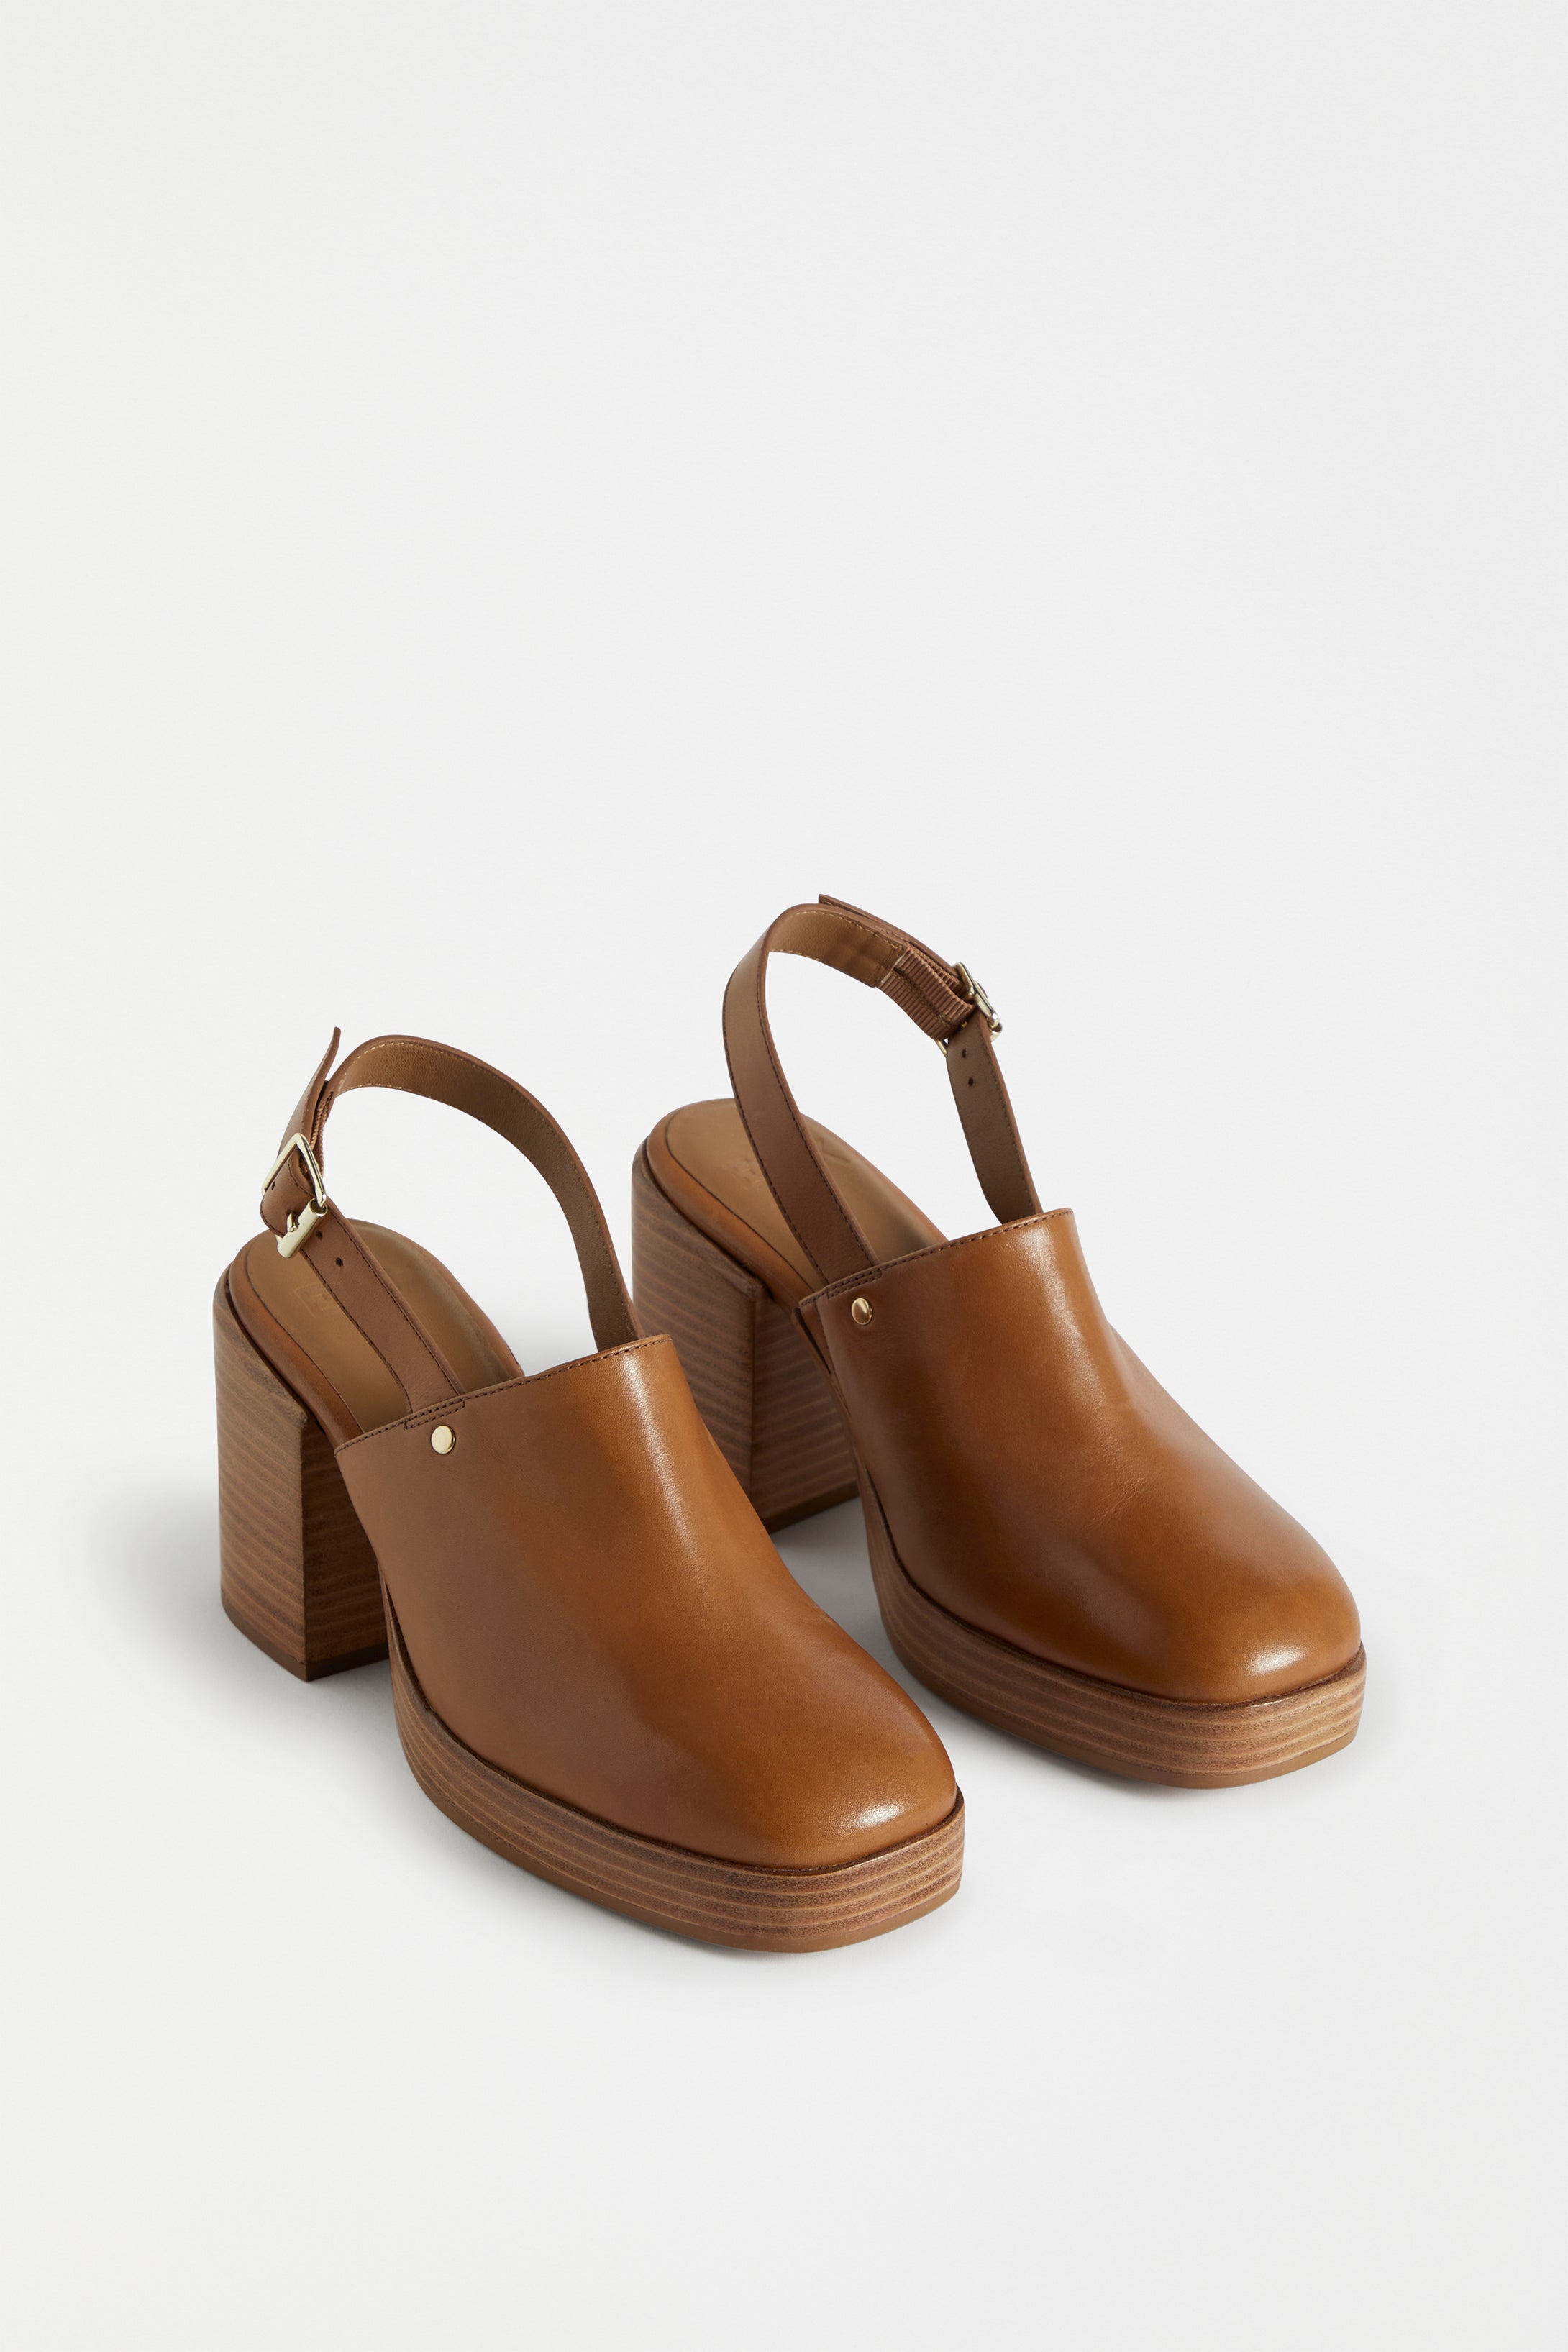 Veronica Beard Shoes | Halifax Studded Clog Sandals | Style Representative